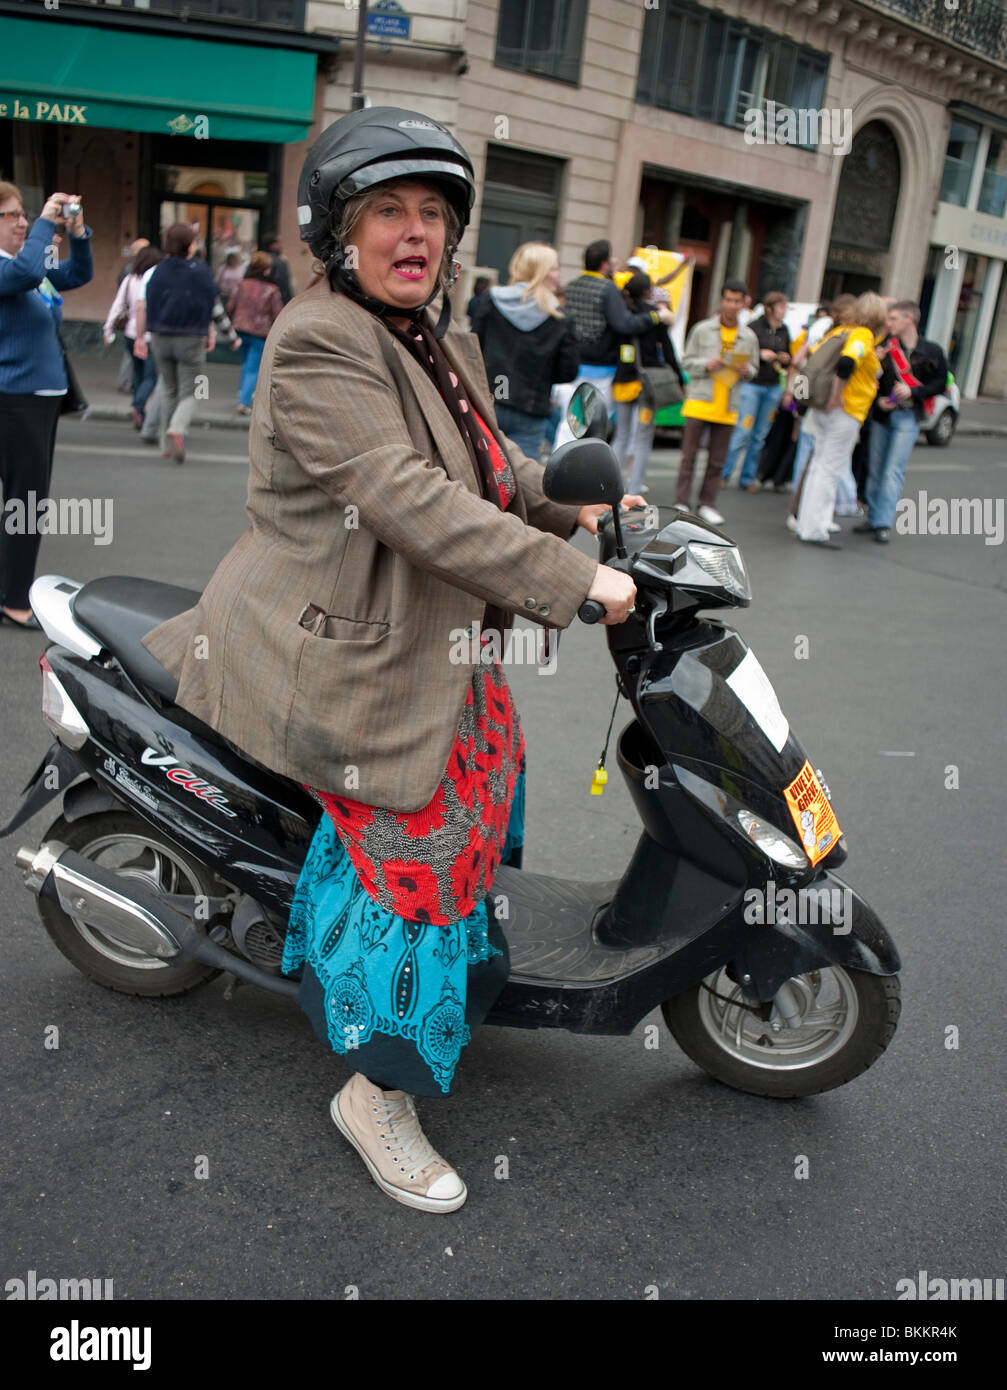 French Woman Sitting on Motorbike on Street, Paris, France Stock Photo -  Alamy